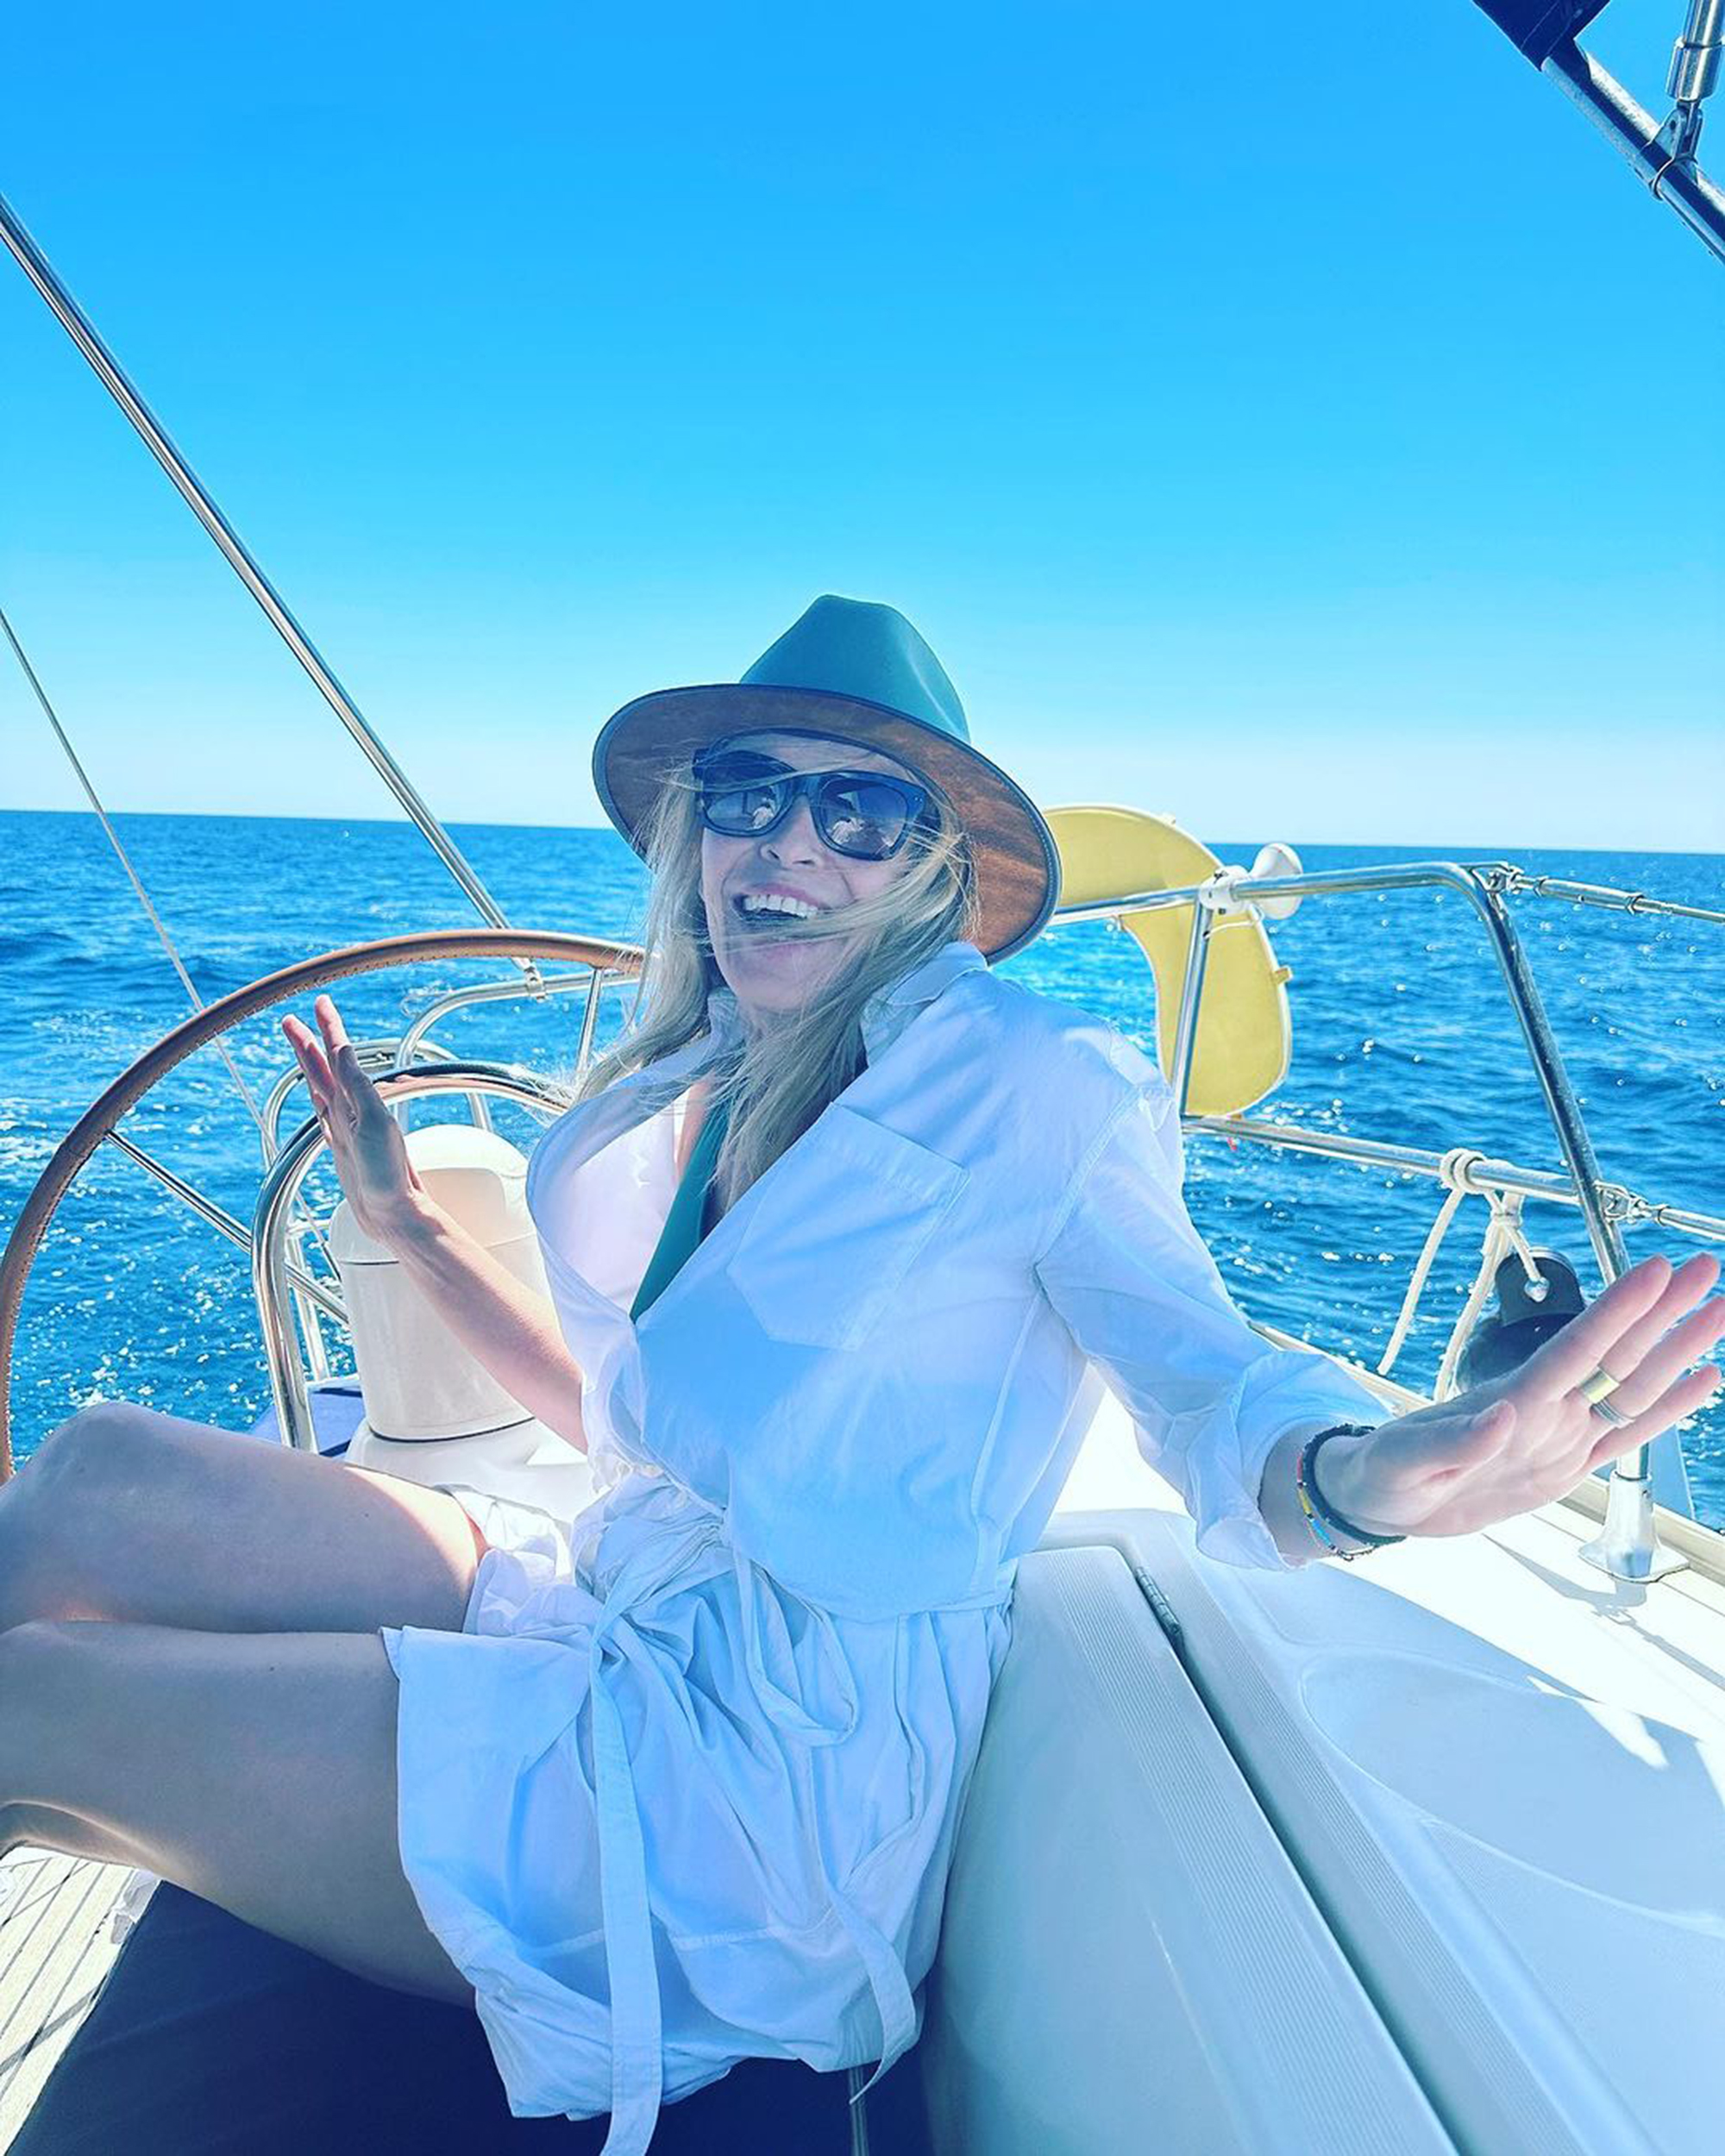 Chelsea Handler sitting on a boat